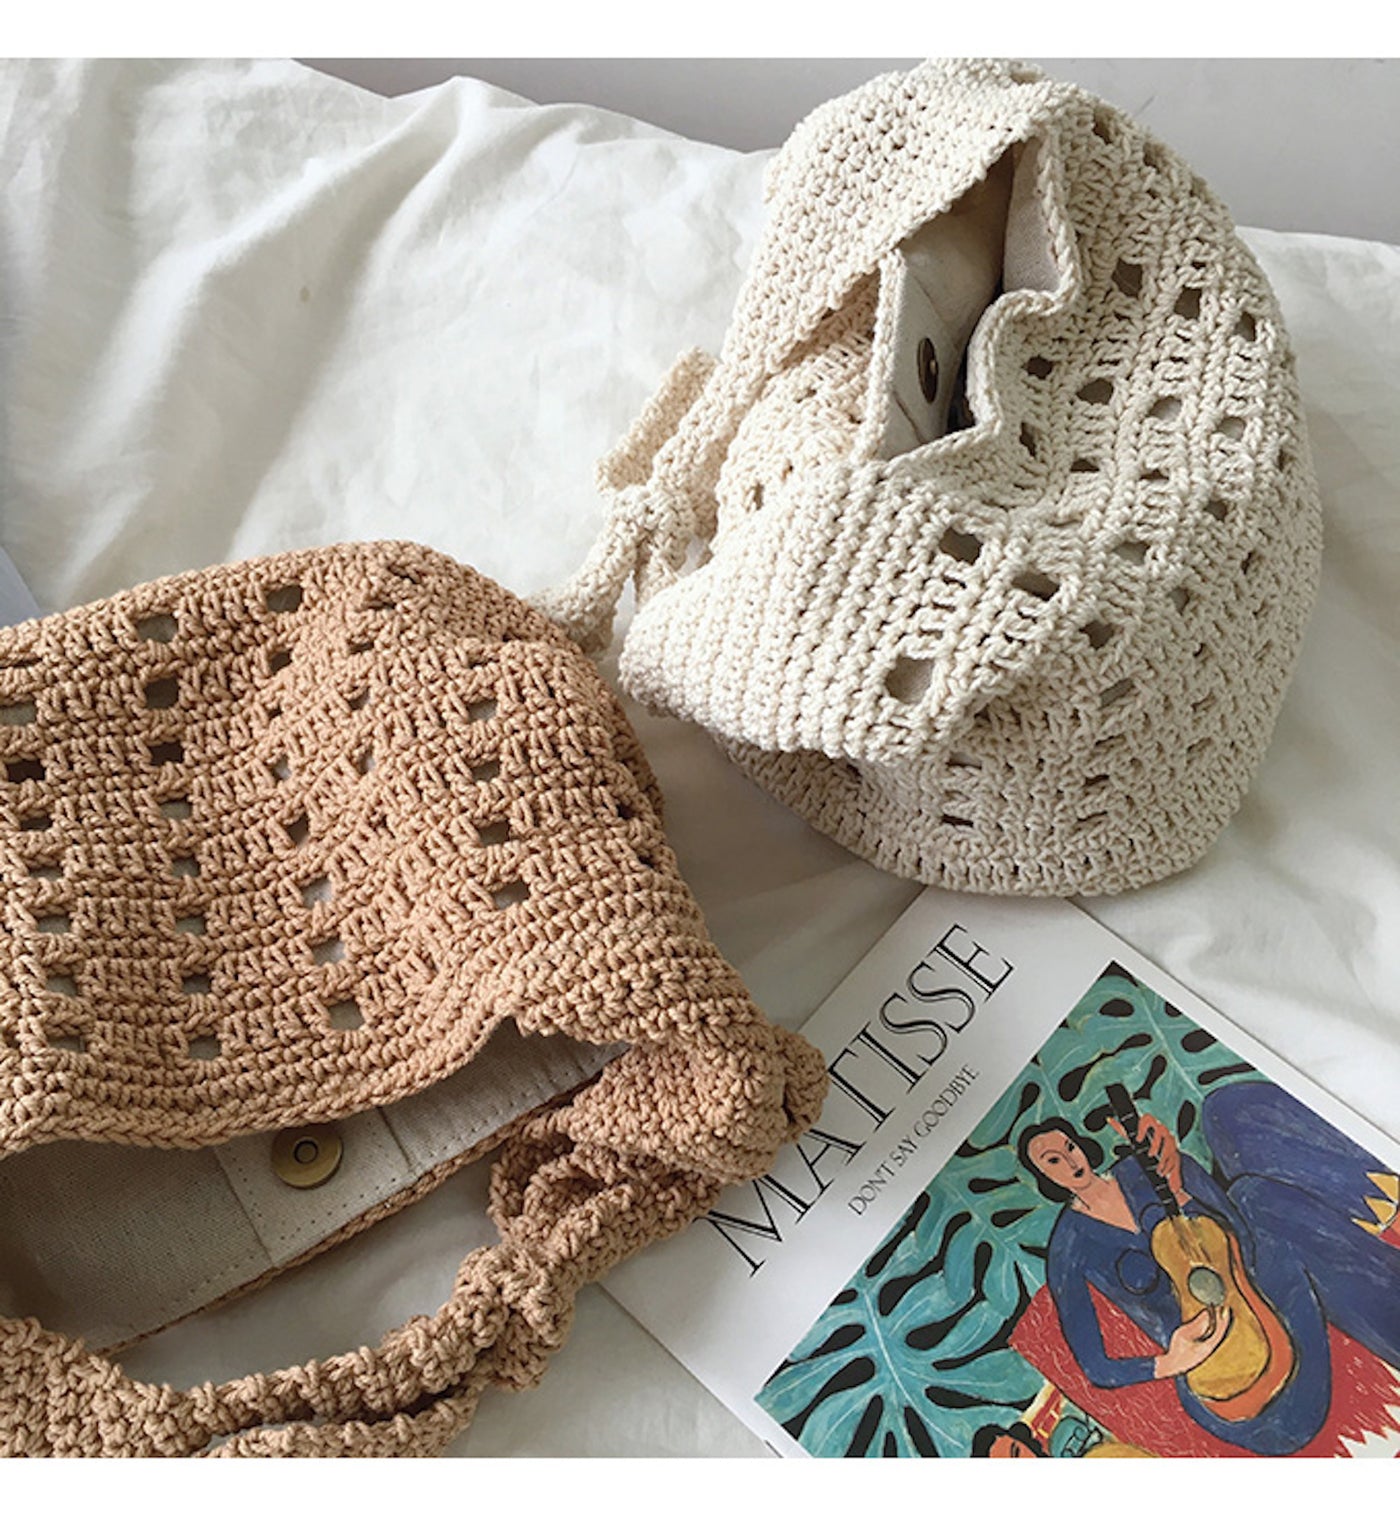 50 Free Crochet Bag Patterns - Through The Loop Yarn Craft